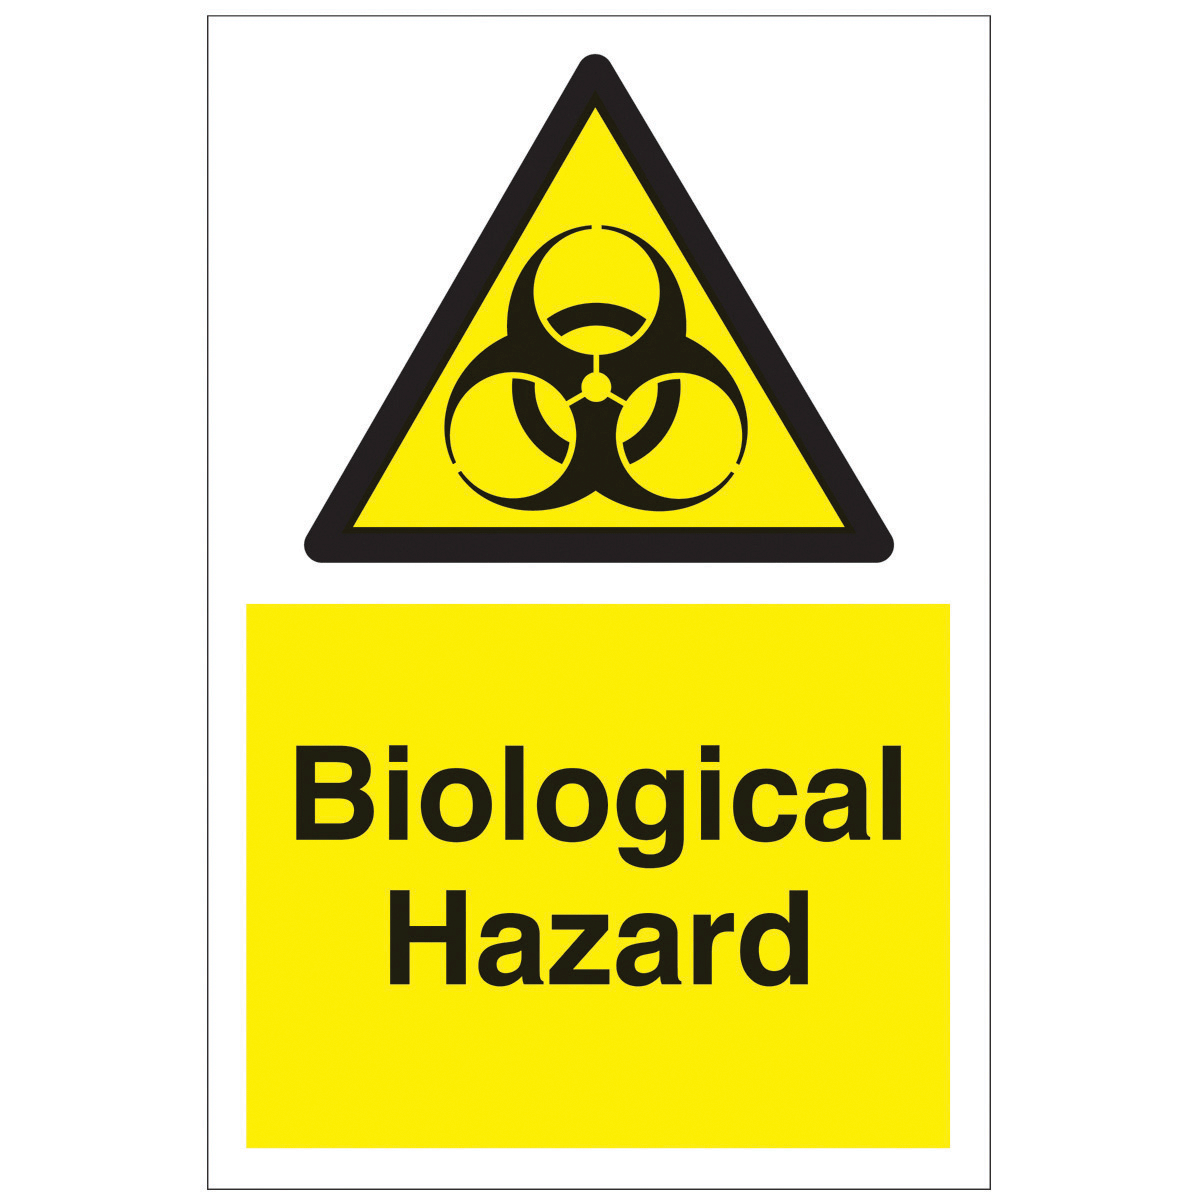 Biological Hazard Safety Sign - Hazard & Warning Sign from BiGDUG UK